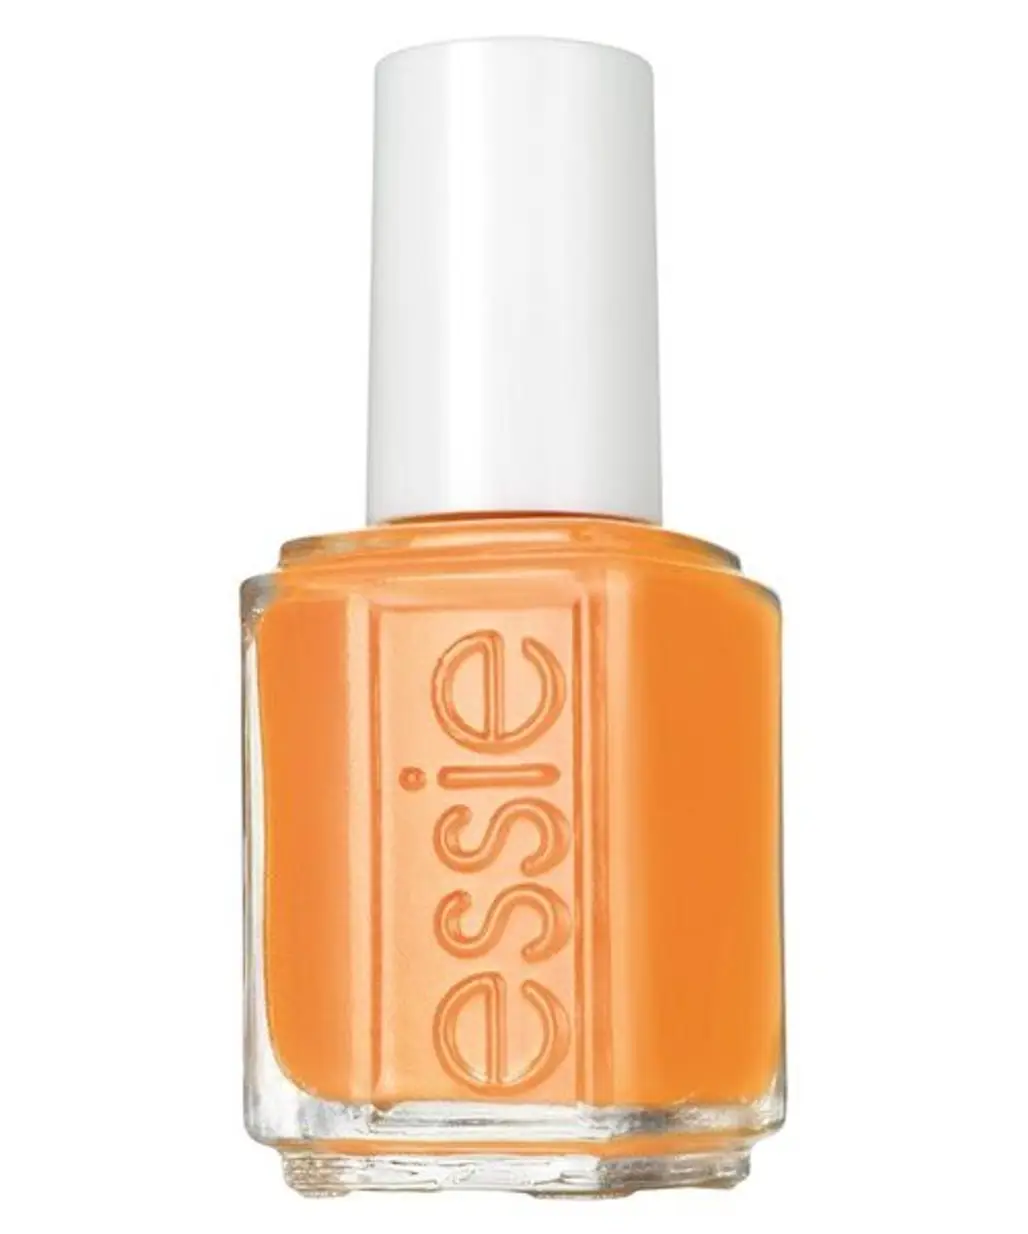 Essie Neon,nail polish,orange,nail care,cosmetics,